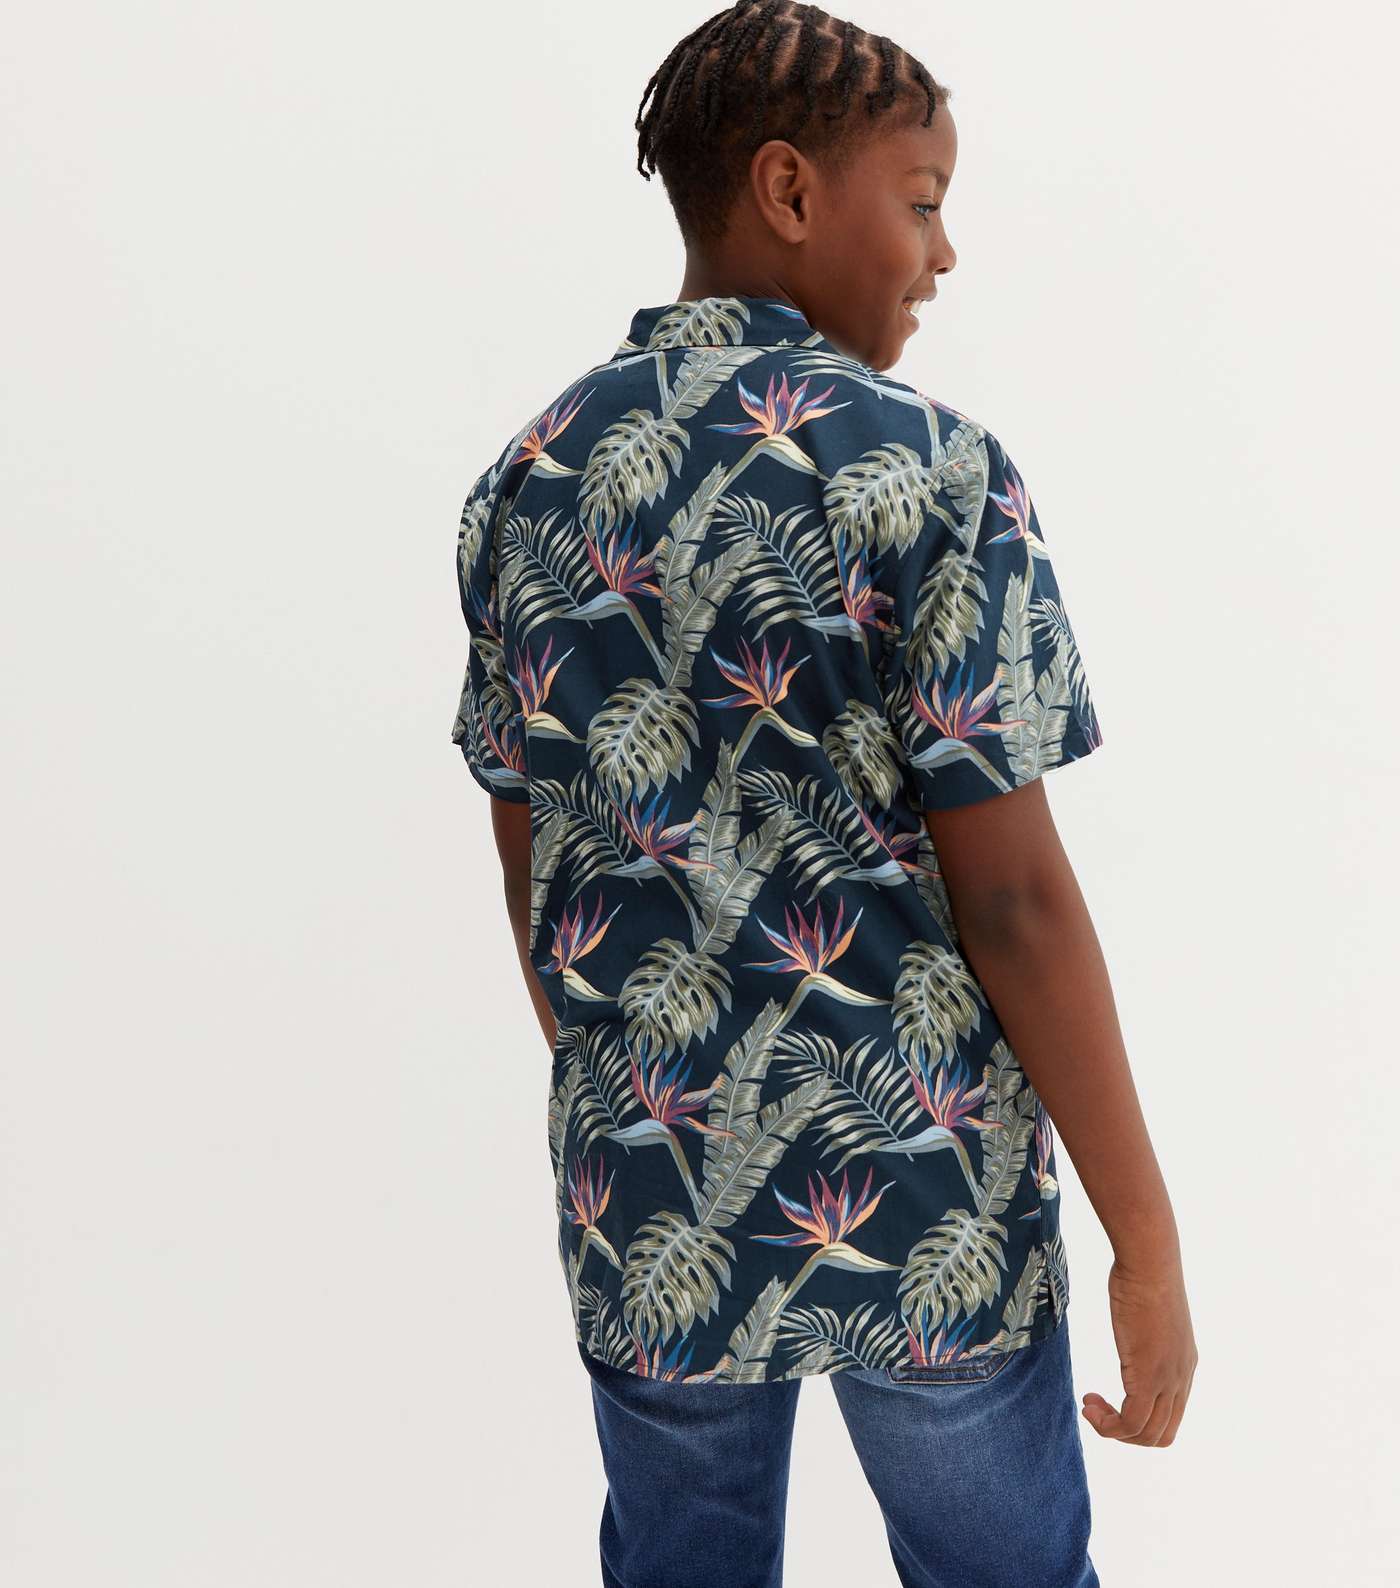 Jack & Jones Junior Teal Tropical Short Sleeve Shirt Image 4